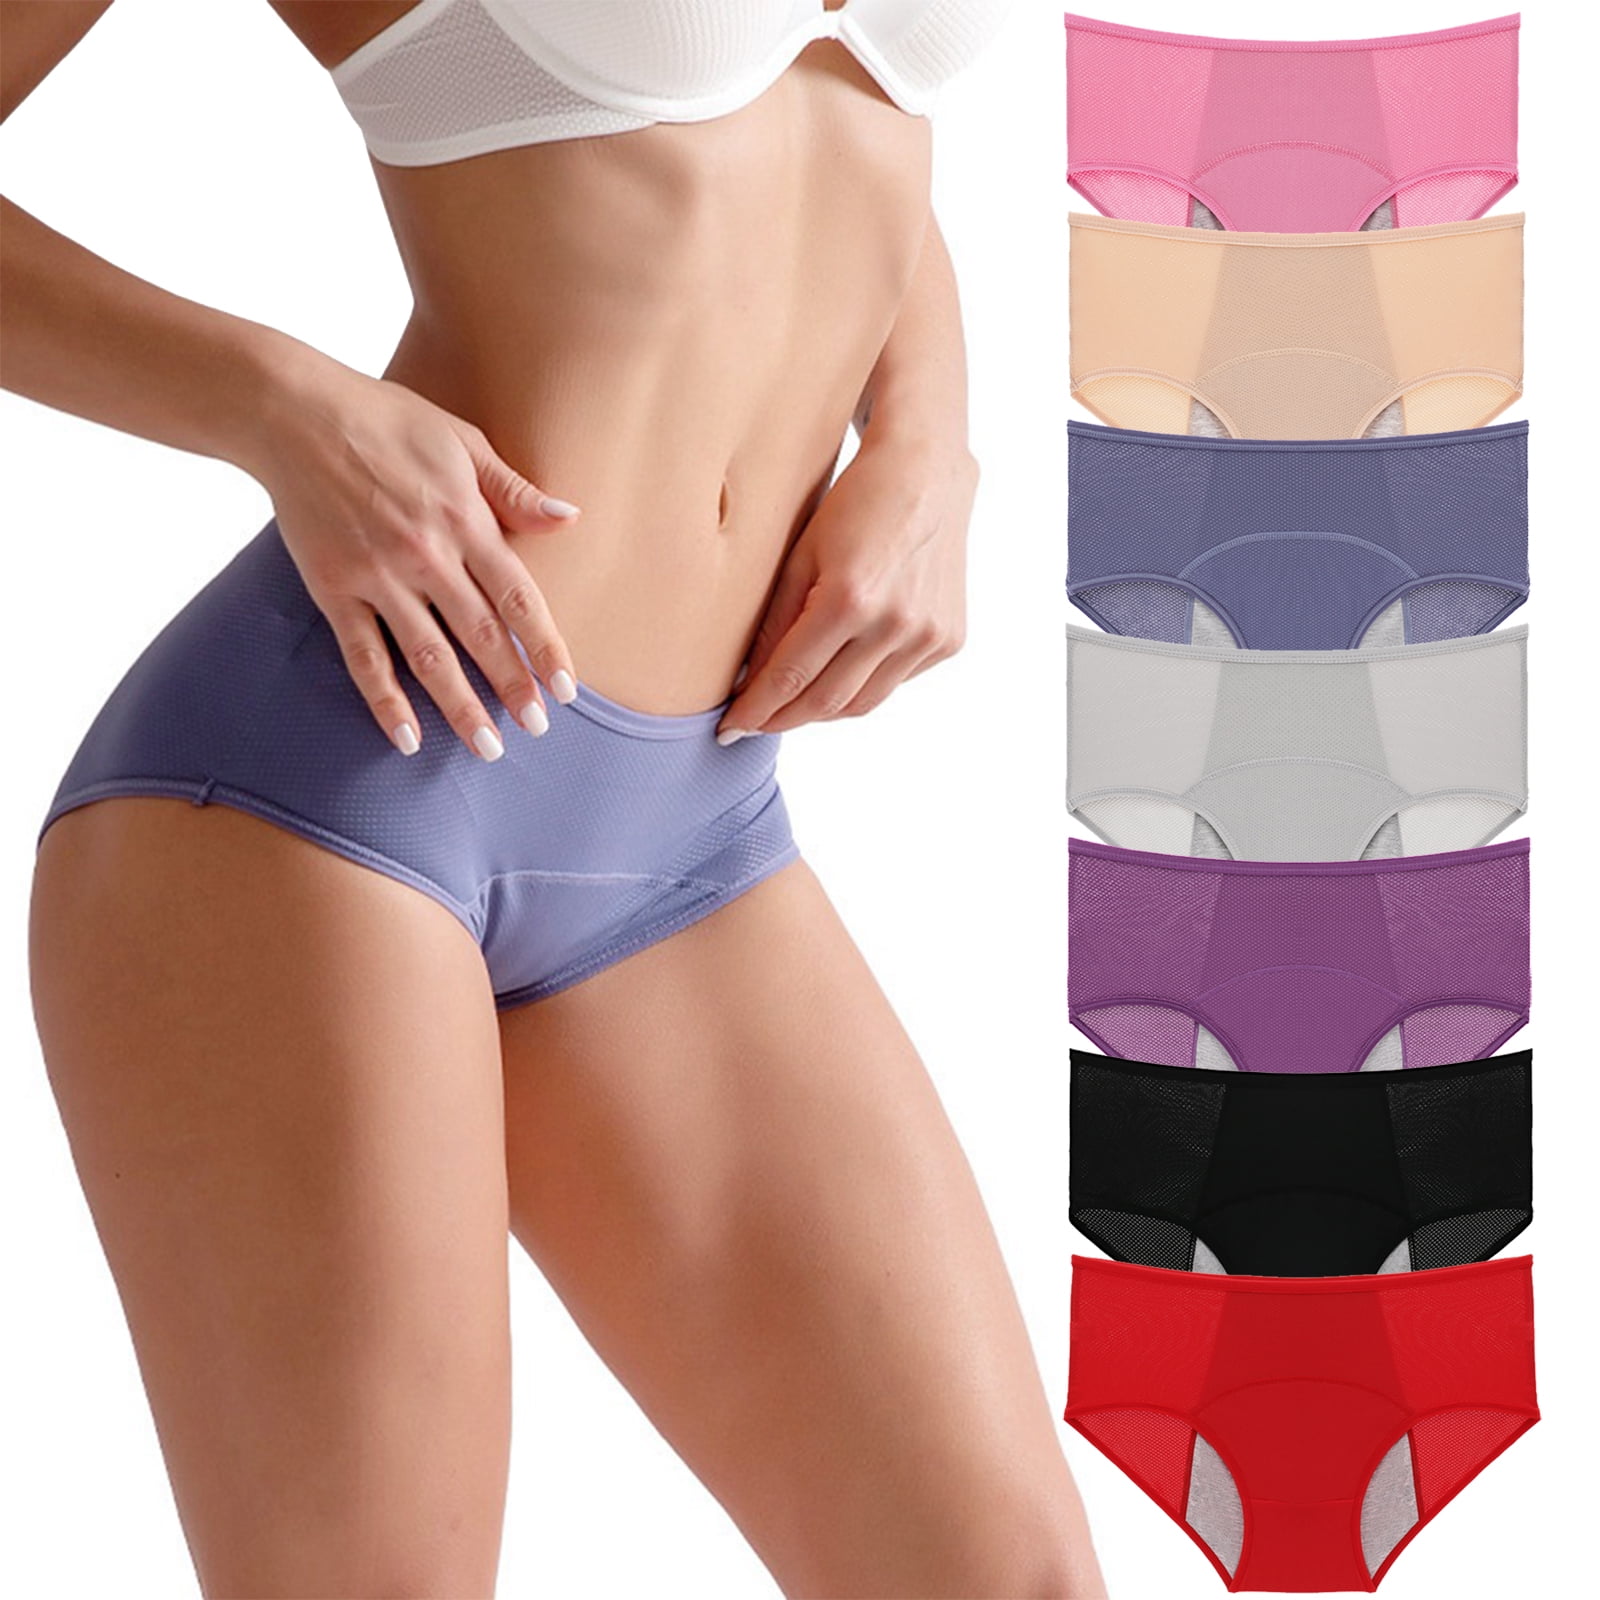  Teens Girls Period Underwear Kids Period Panties Menstrual  Leakproof Protective Underwear For Teens Cotton Briefs